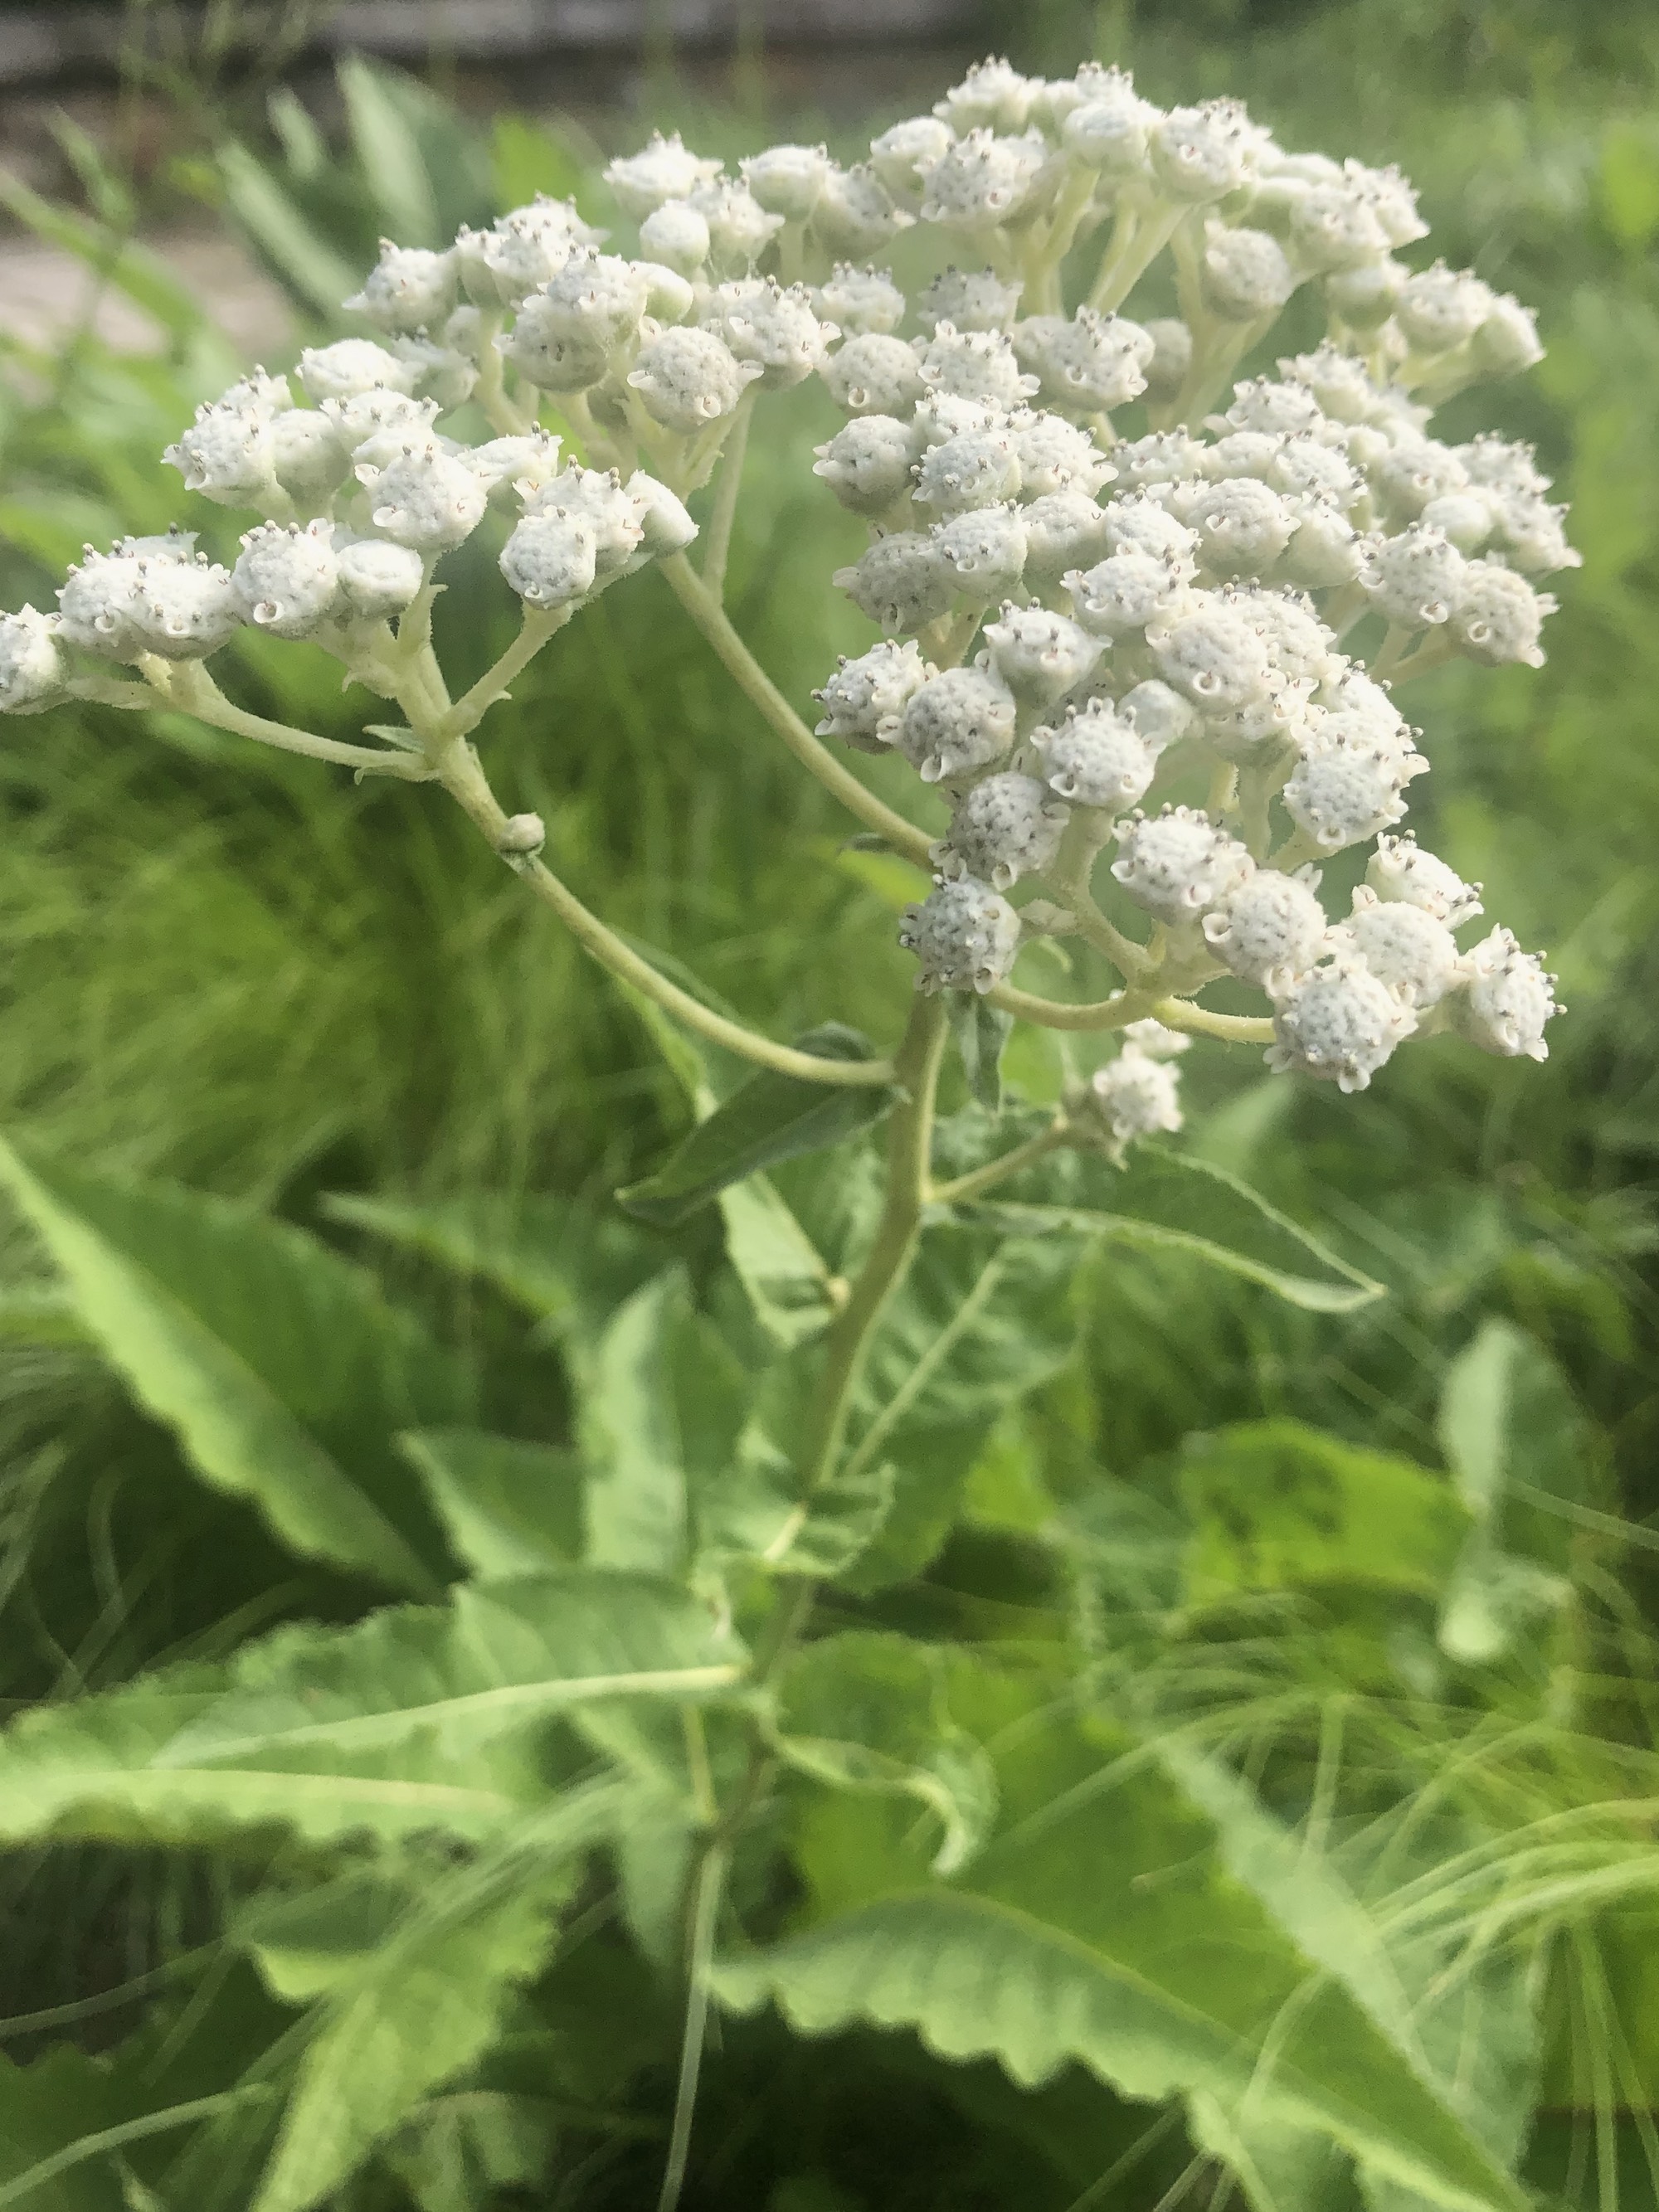 Wild Quinine in UW Arbortetum Native Gardens in Madison, Wisconsin on July 5, 2021.